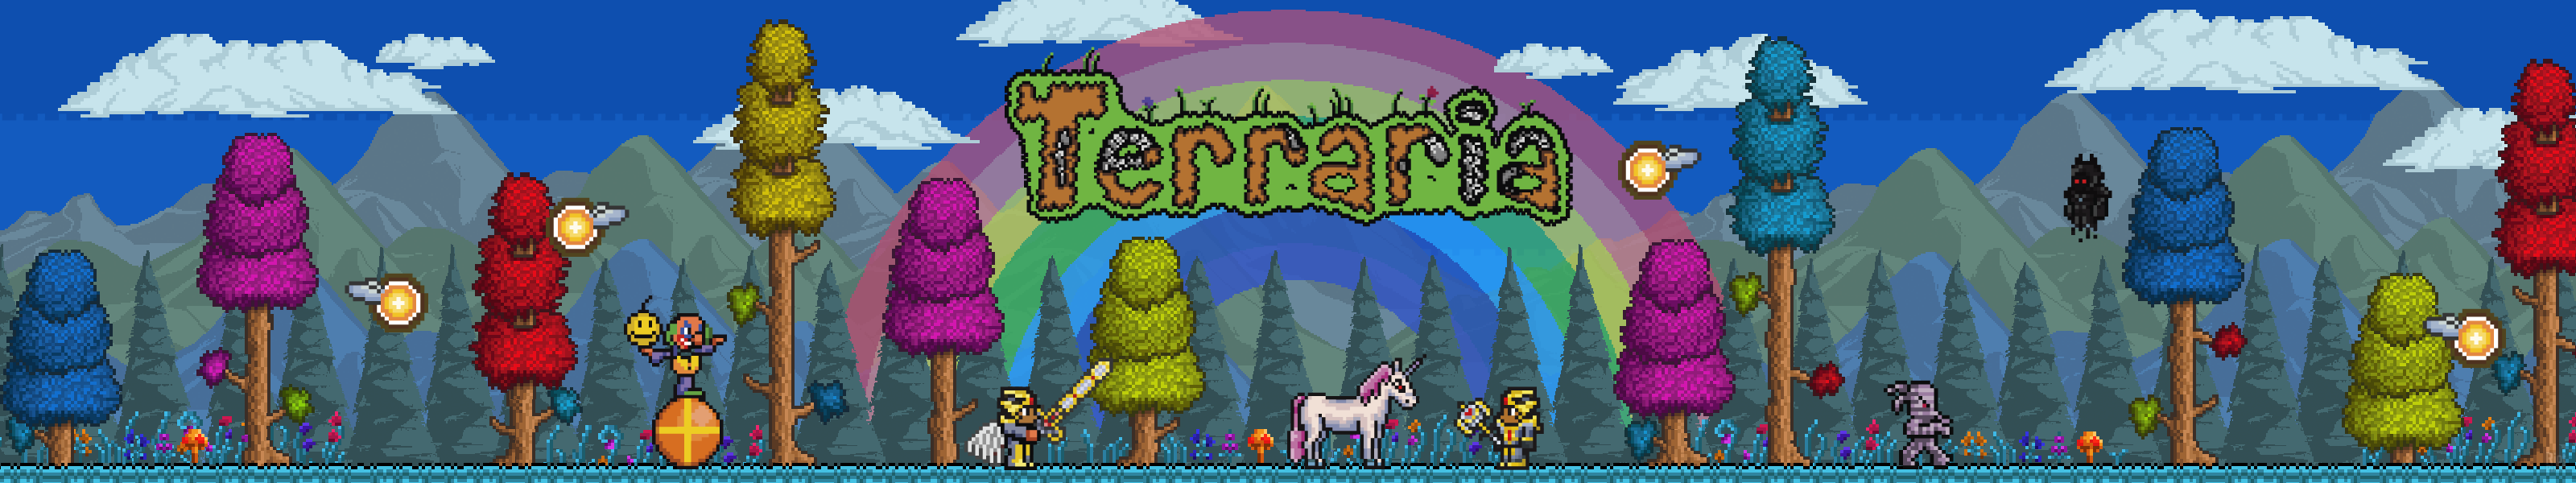 Terraria Journey s End v1 4 1 2 Mono GOG Linux Native